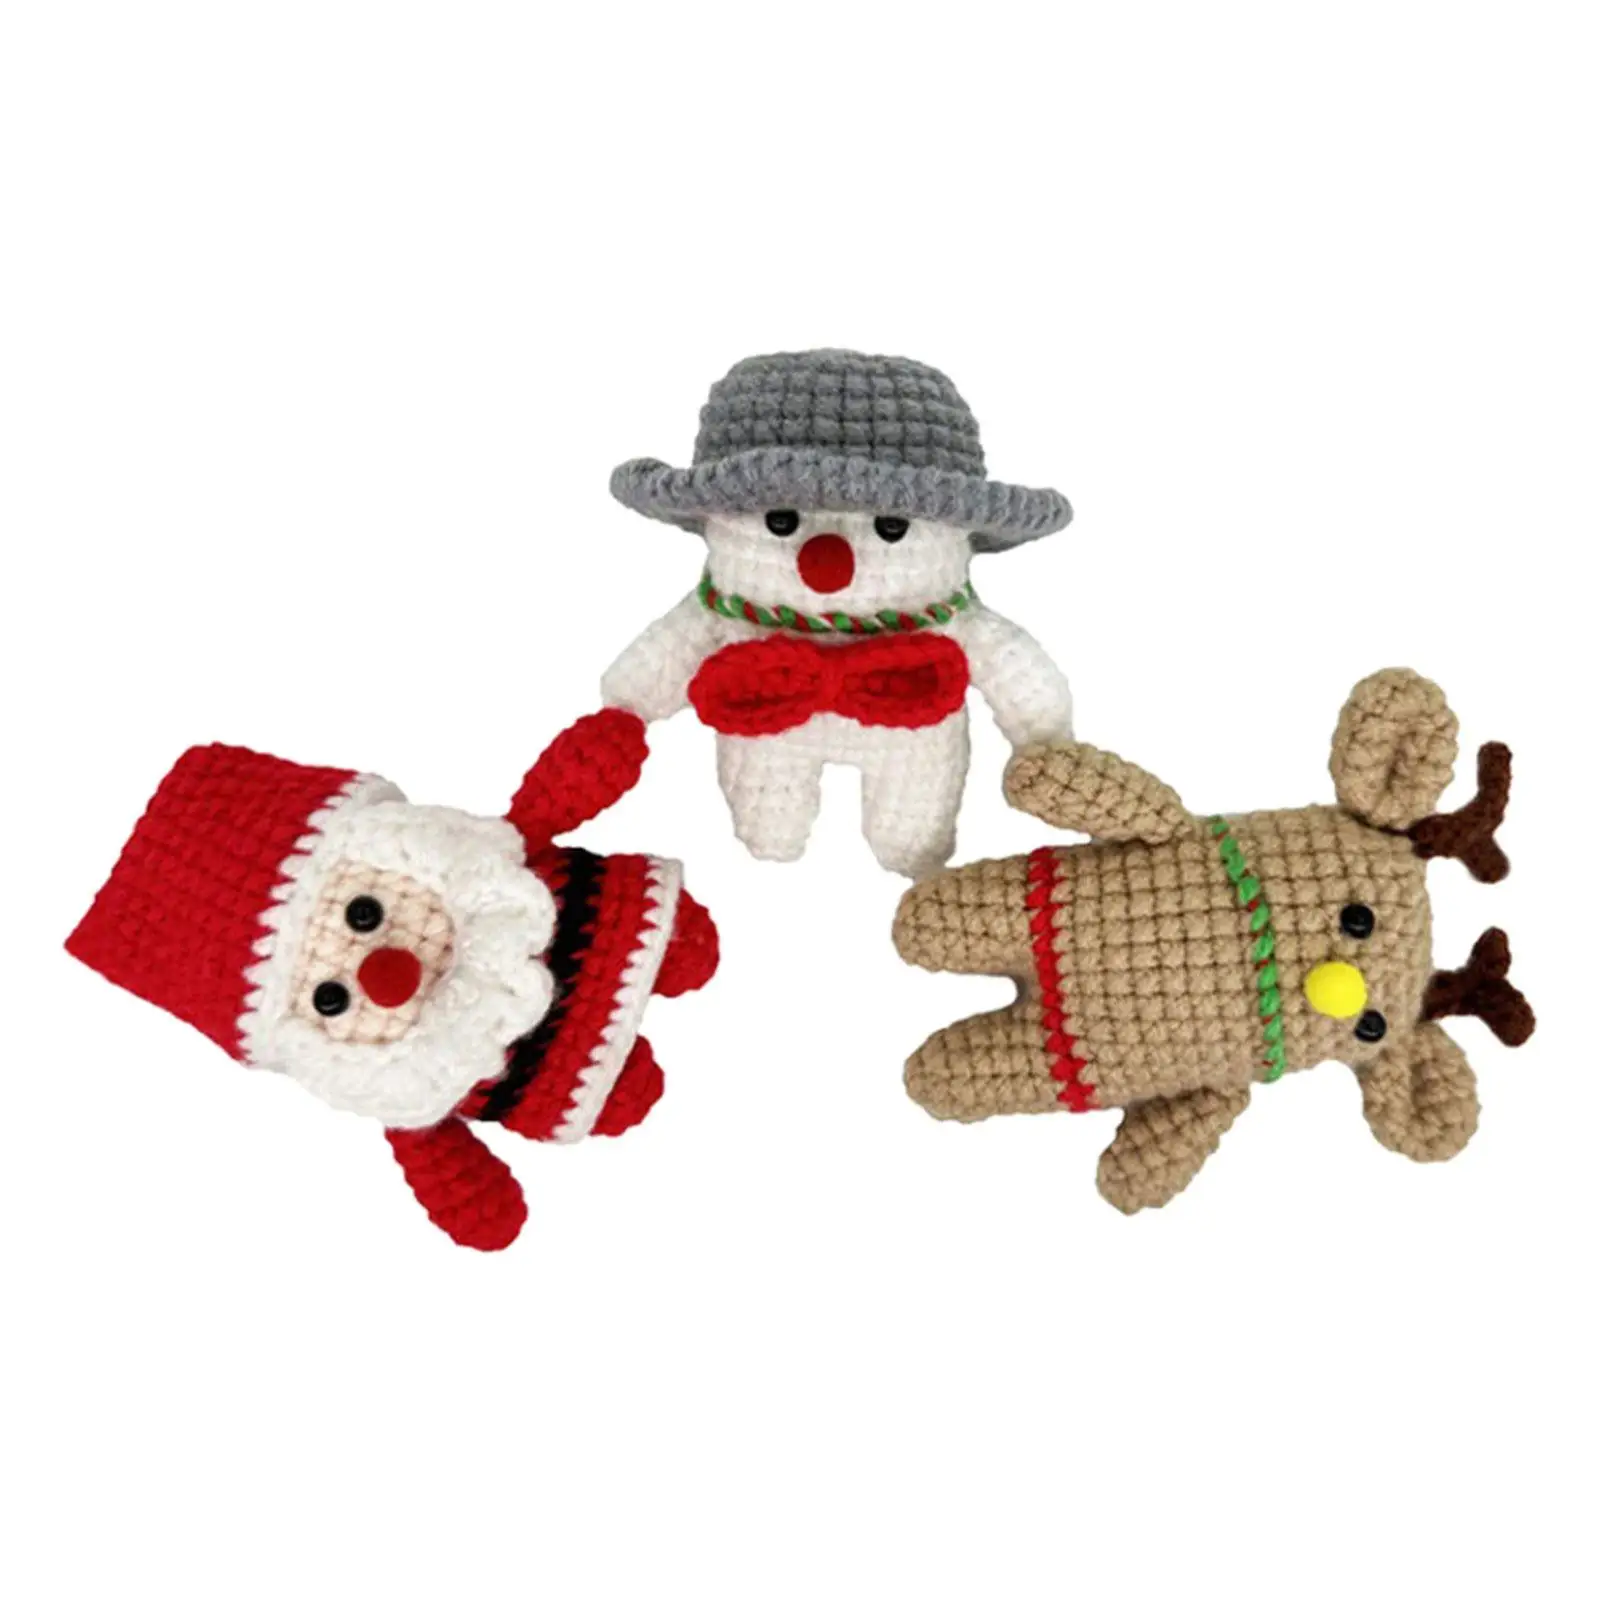 Crochet Beginner Set Christmas Deer Toy Practical Household Party Toy Crochet Material Set for Starter Adults Children Teens